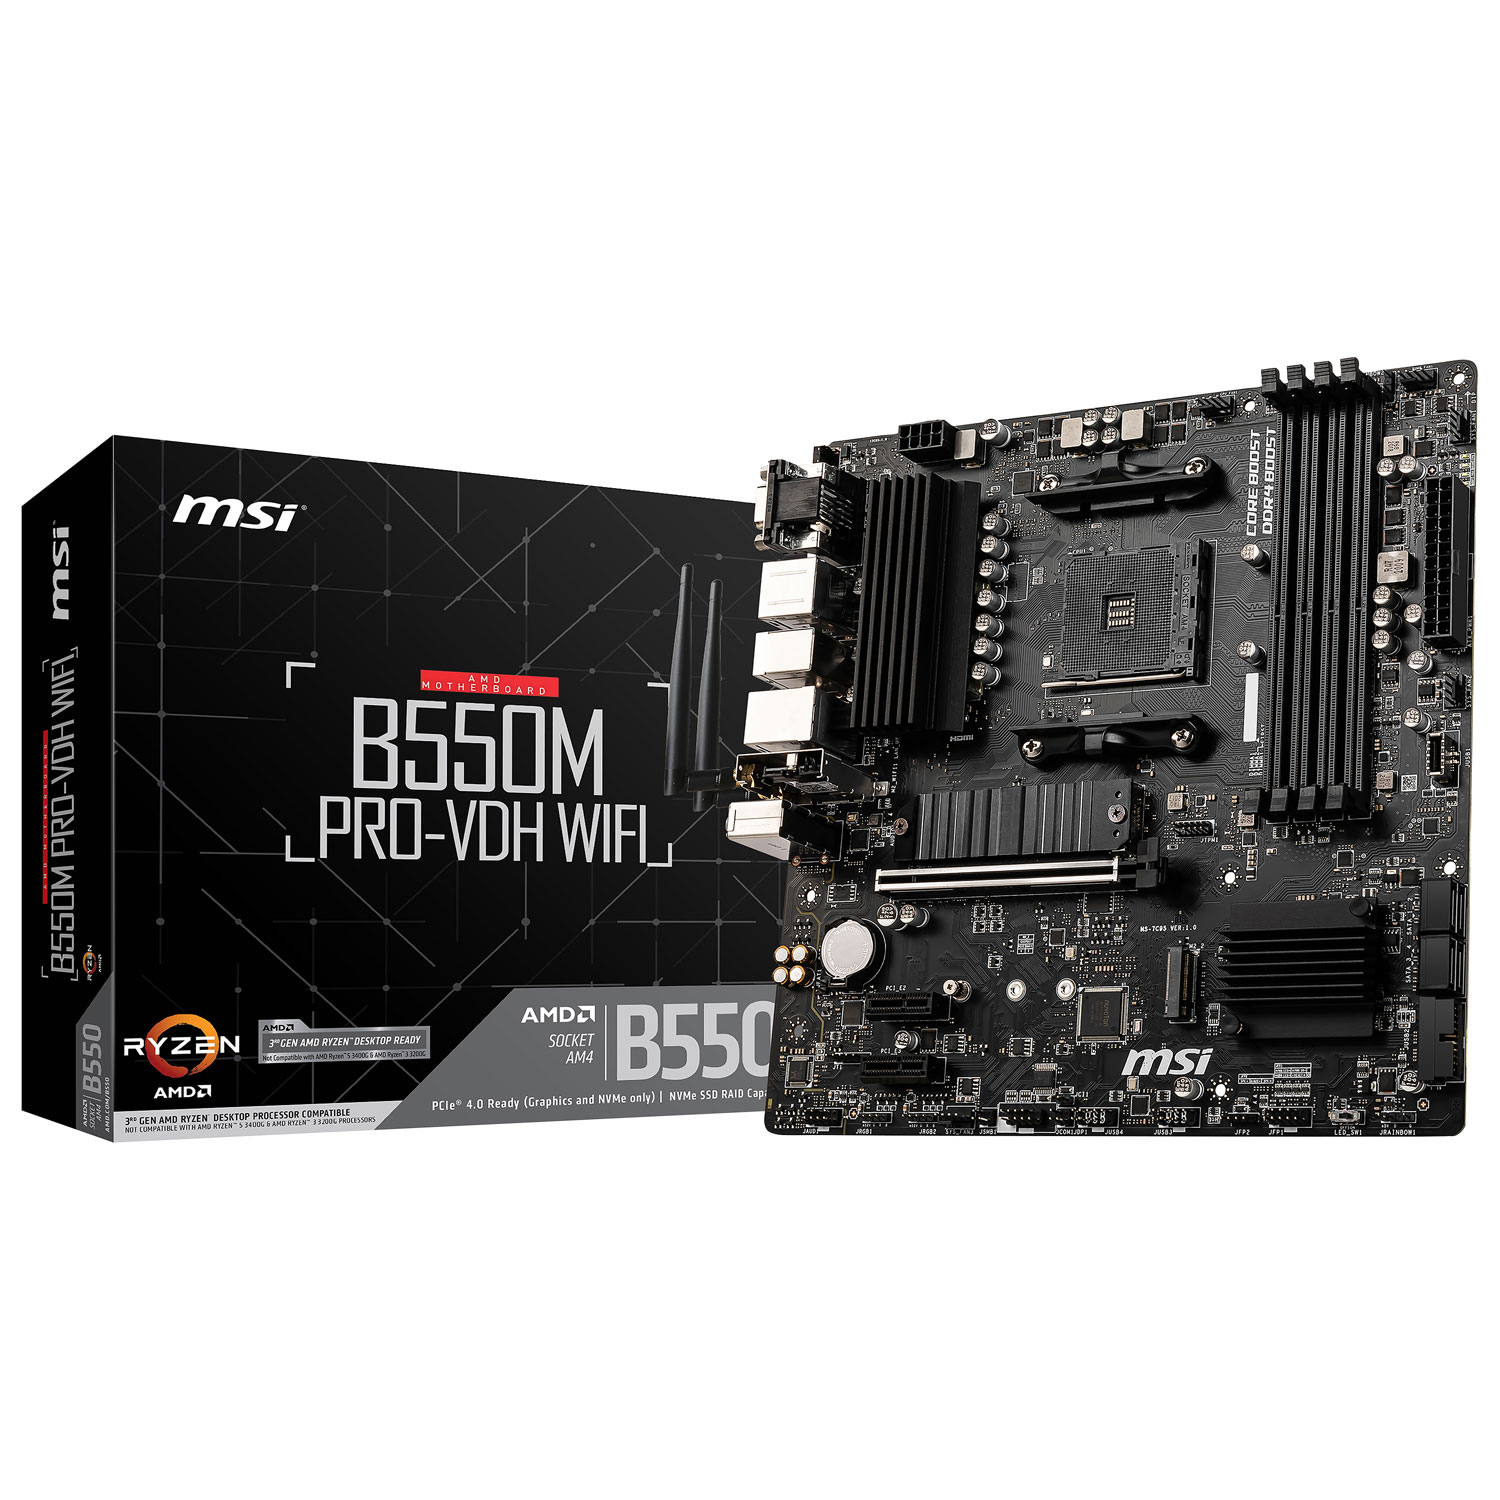 MSI B550M PRO-VDH WIFI Micro-ATX LGA AM4 DDR4 Motherboard for AMD Ryzen 3000/5000 Series CPUs